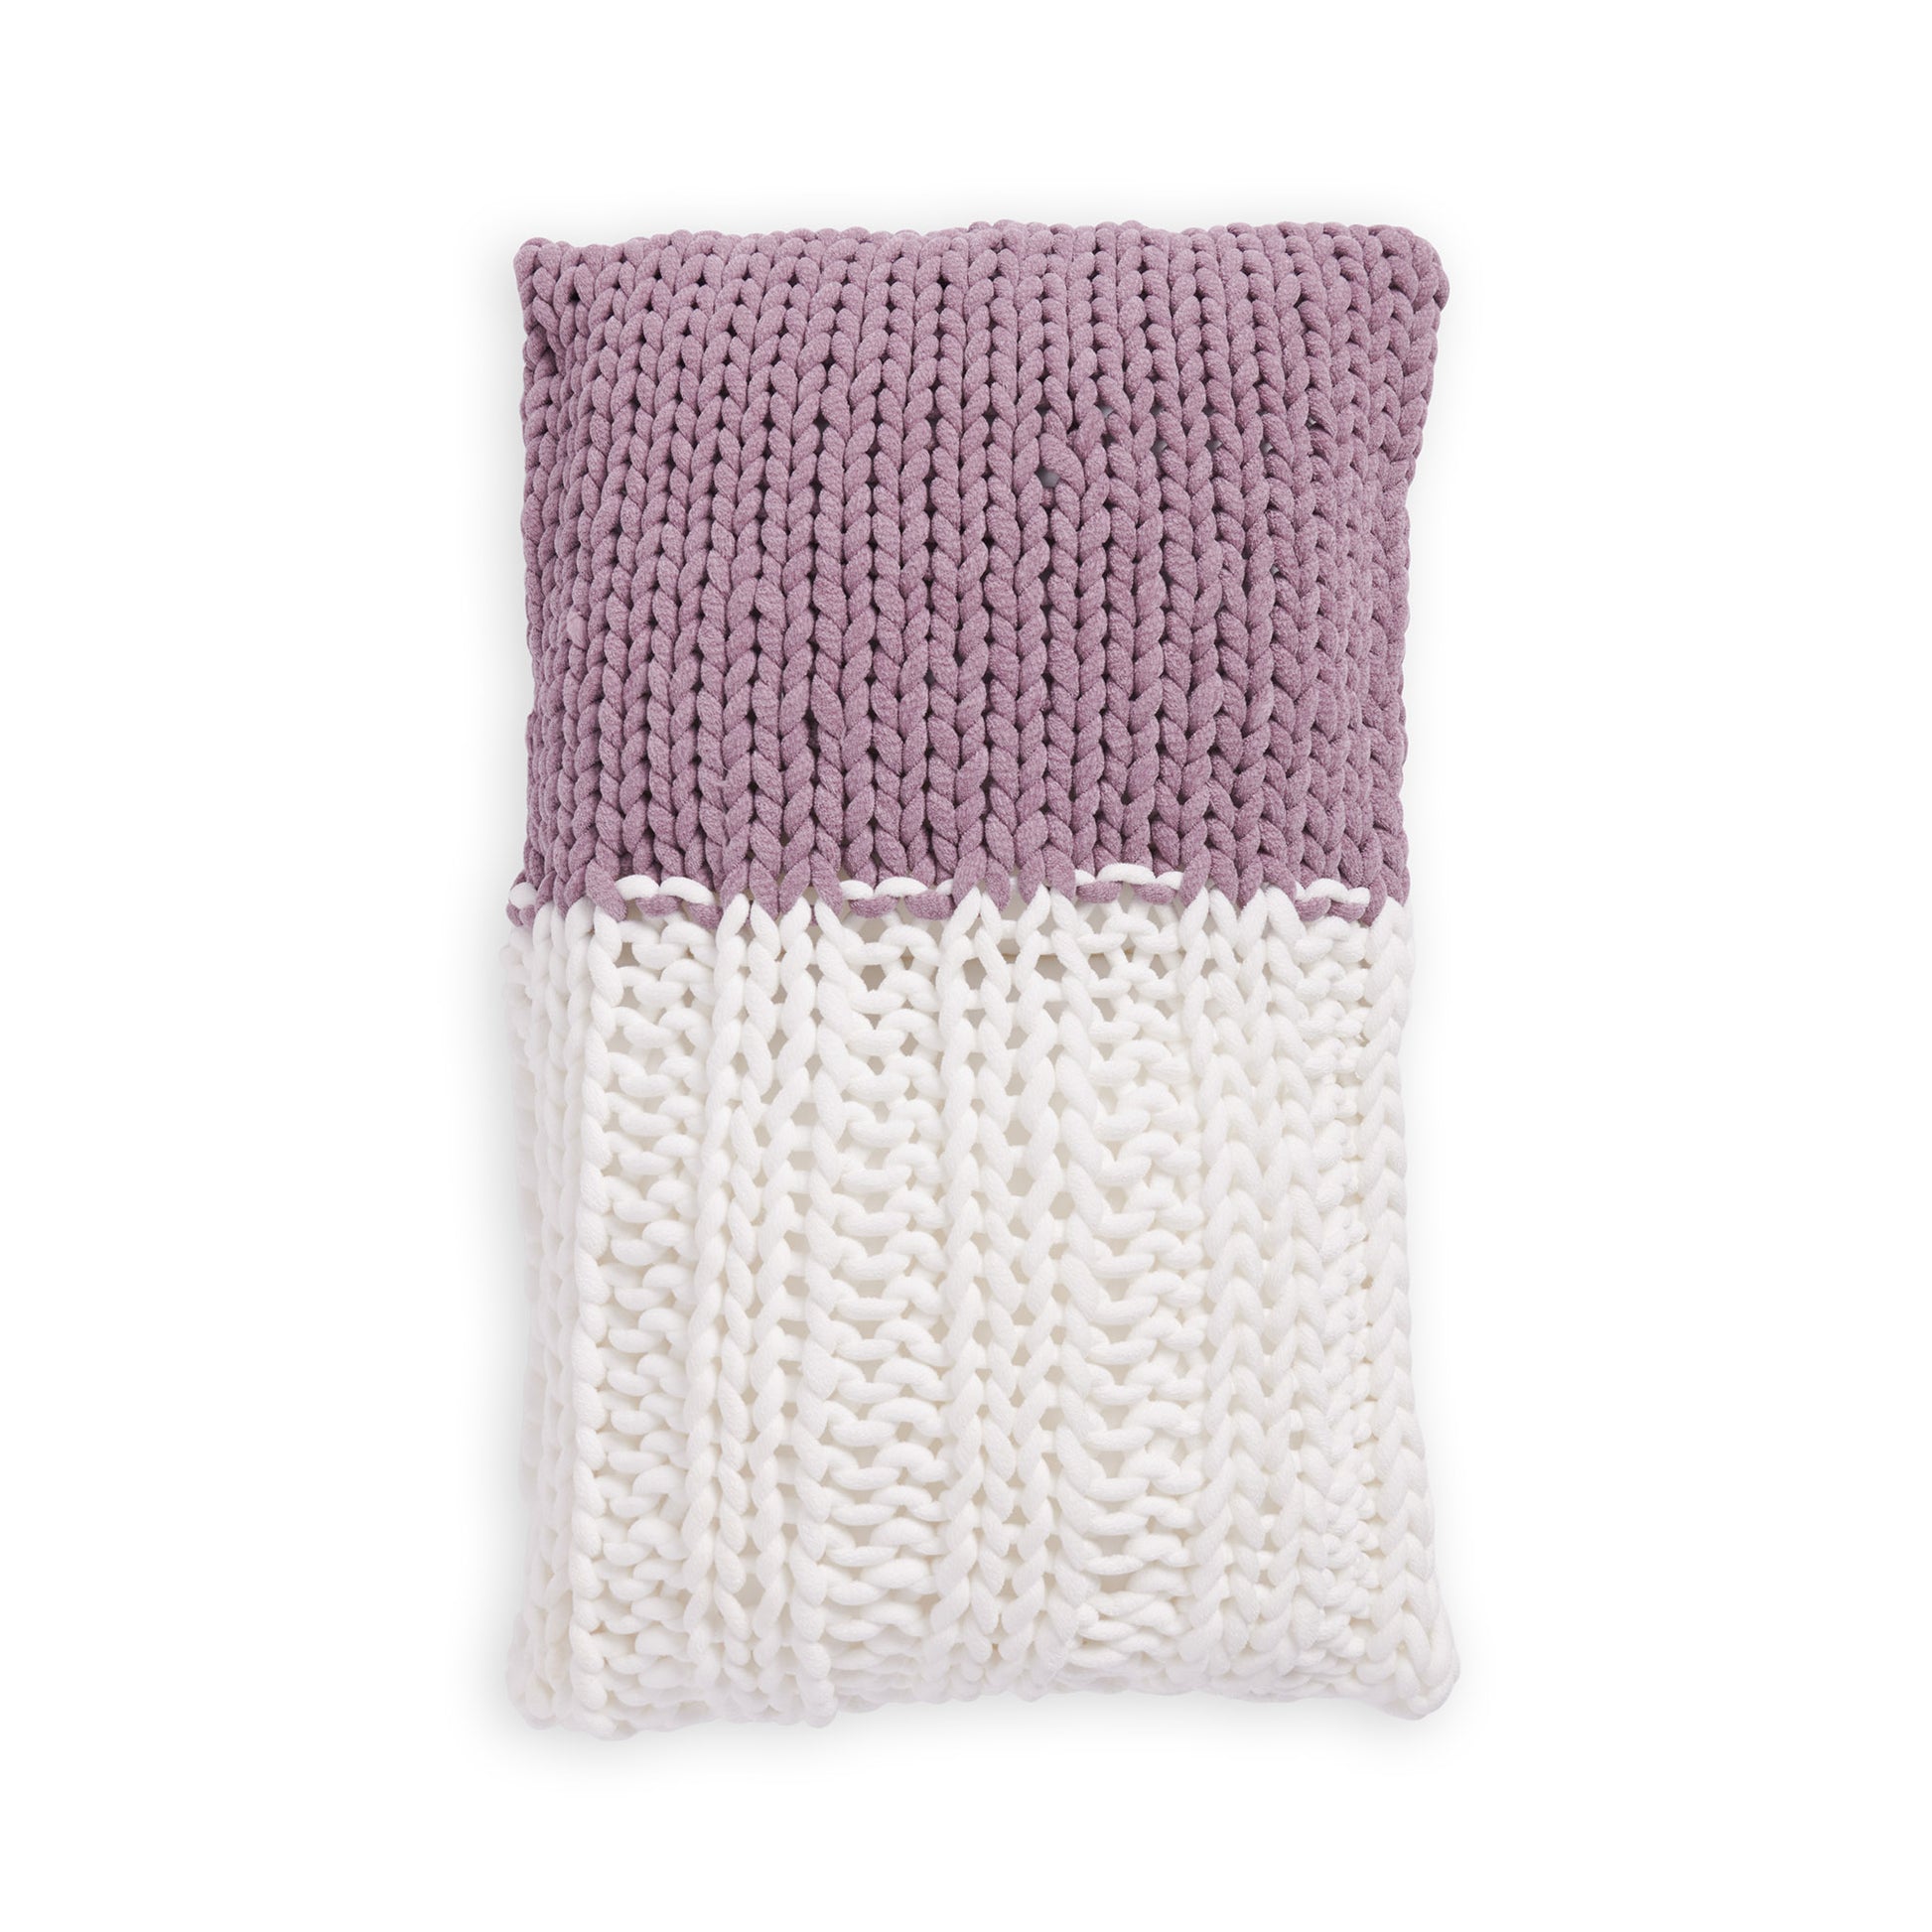 Free Bernat Big Snuggle Knit Pillow Pattern